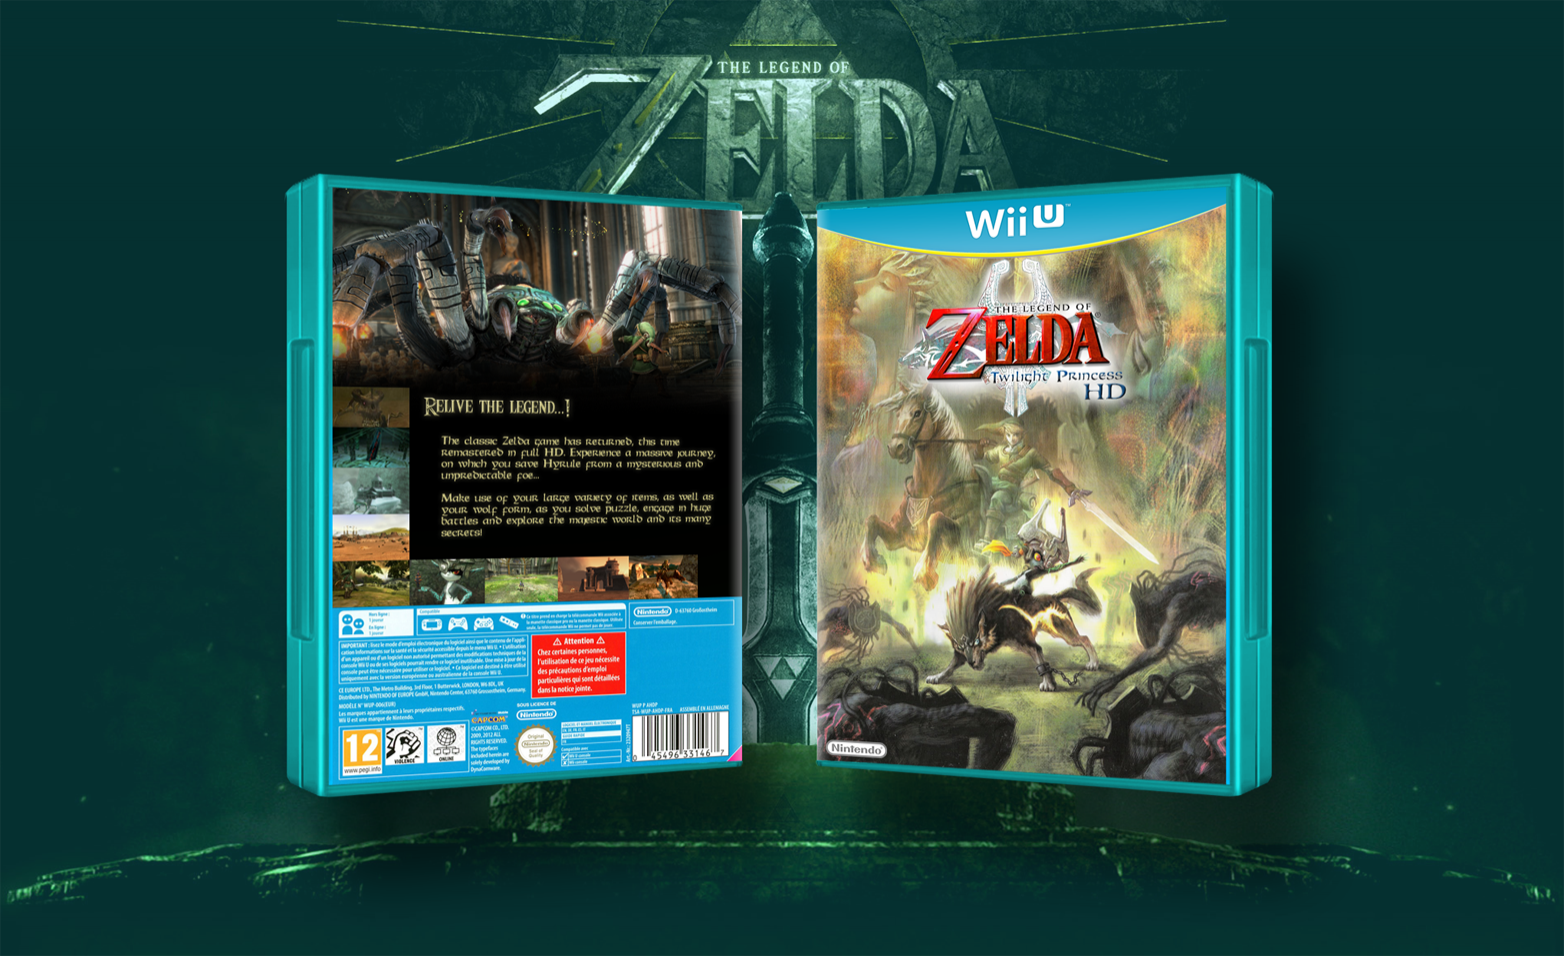 The Legend of Zelda : Twilight Princess HD box cover